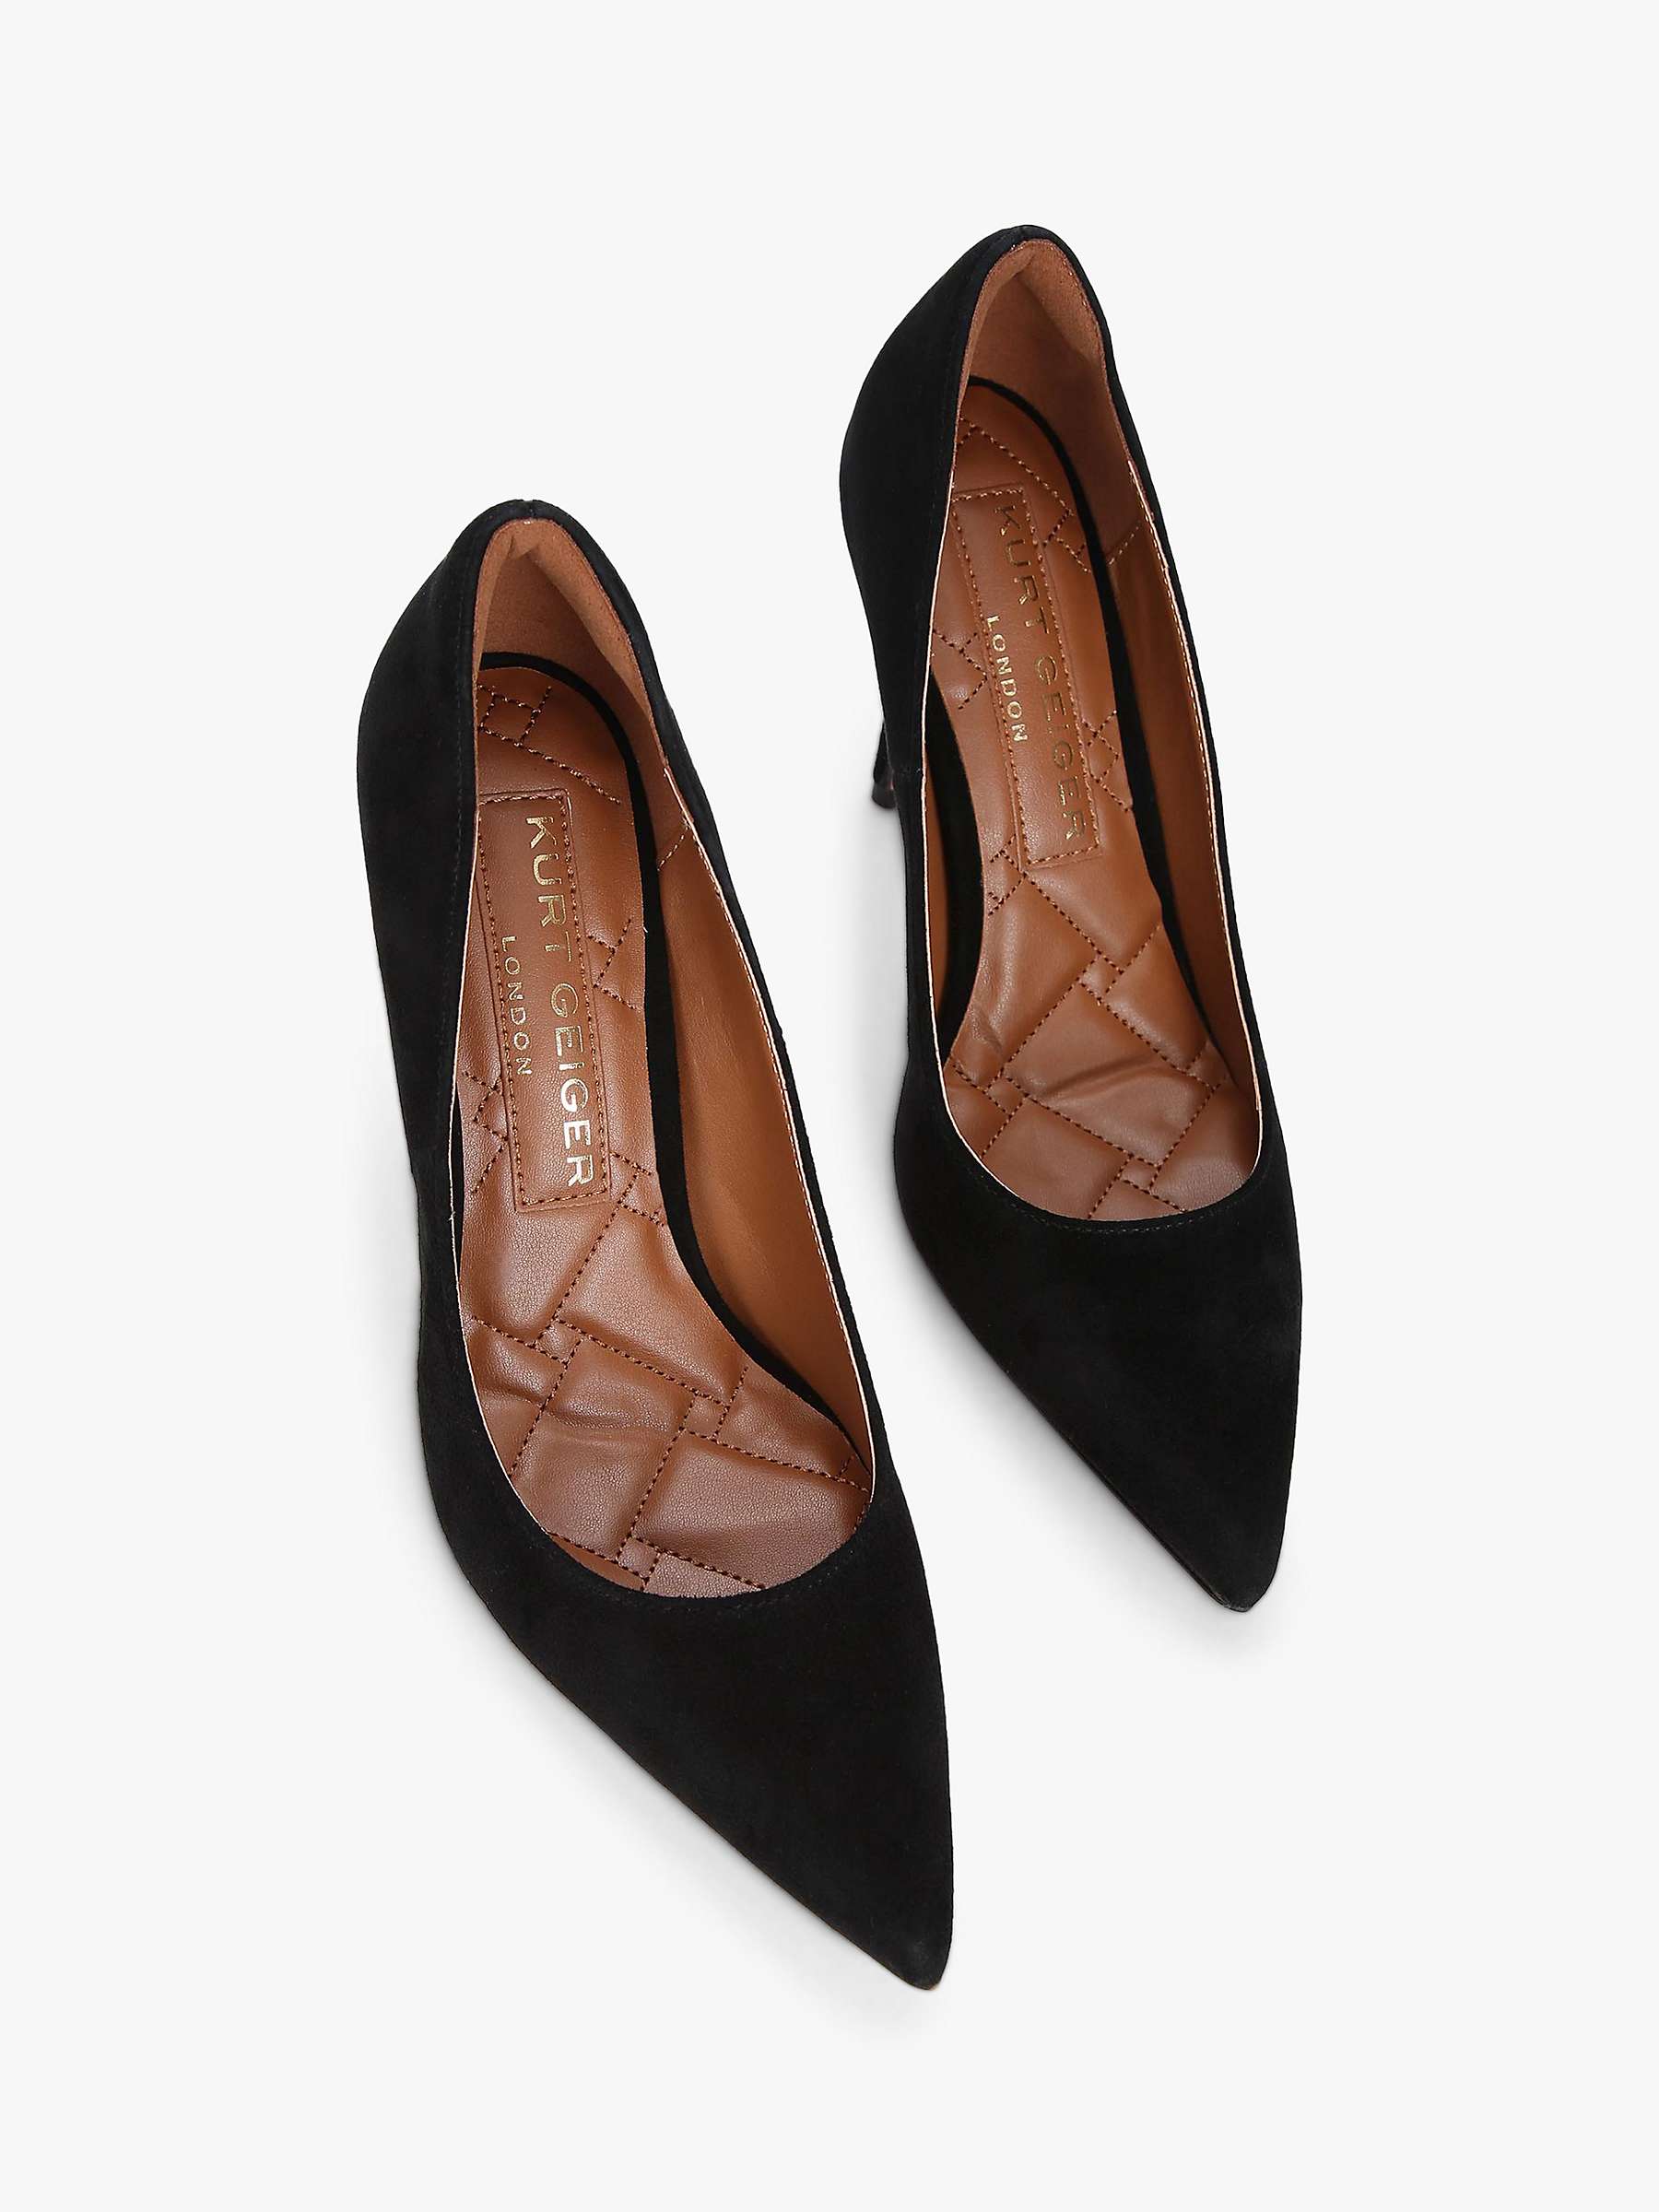 Buy Kurt Geiger London Belgravia Suede Court Shoes, Black Online at johnlewis.com